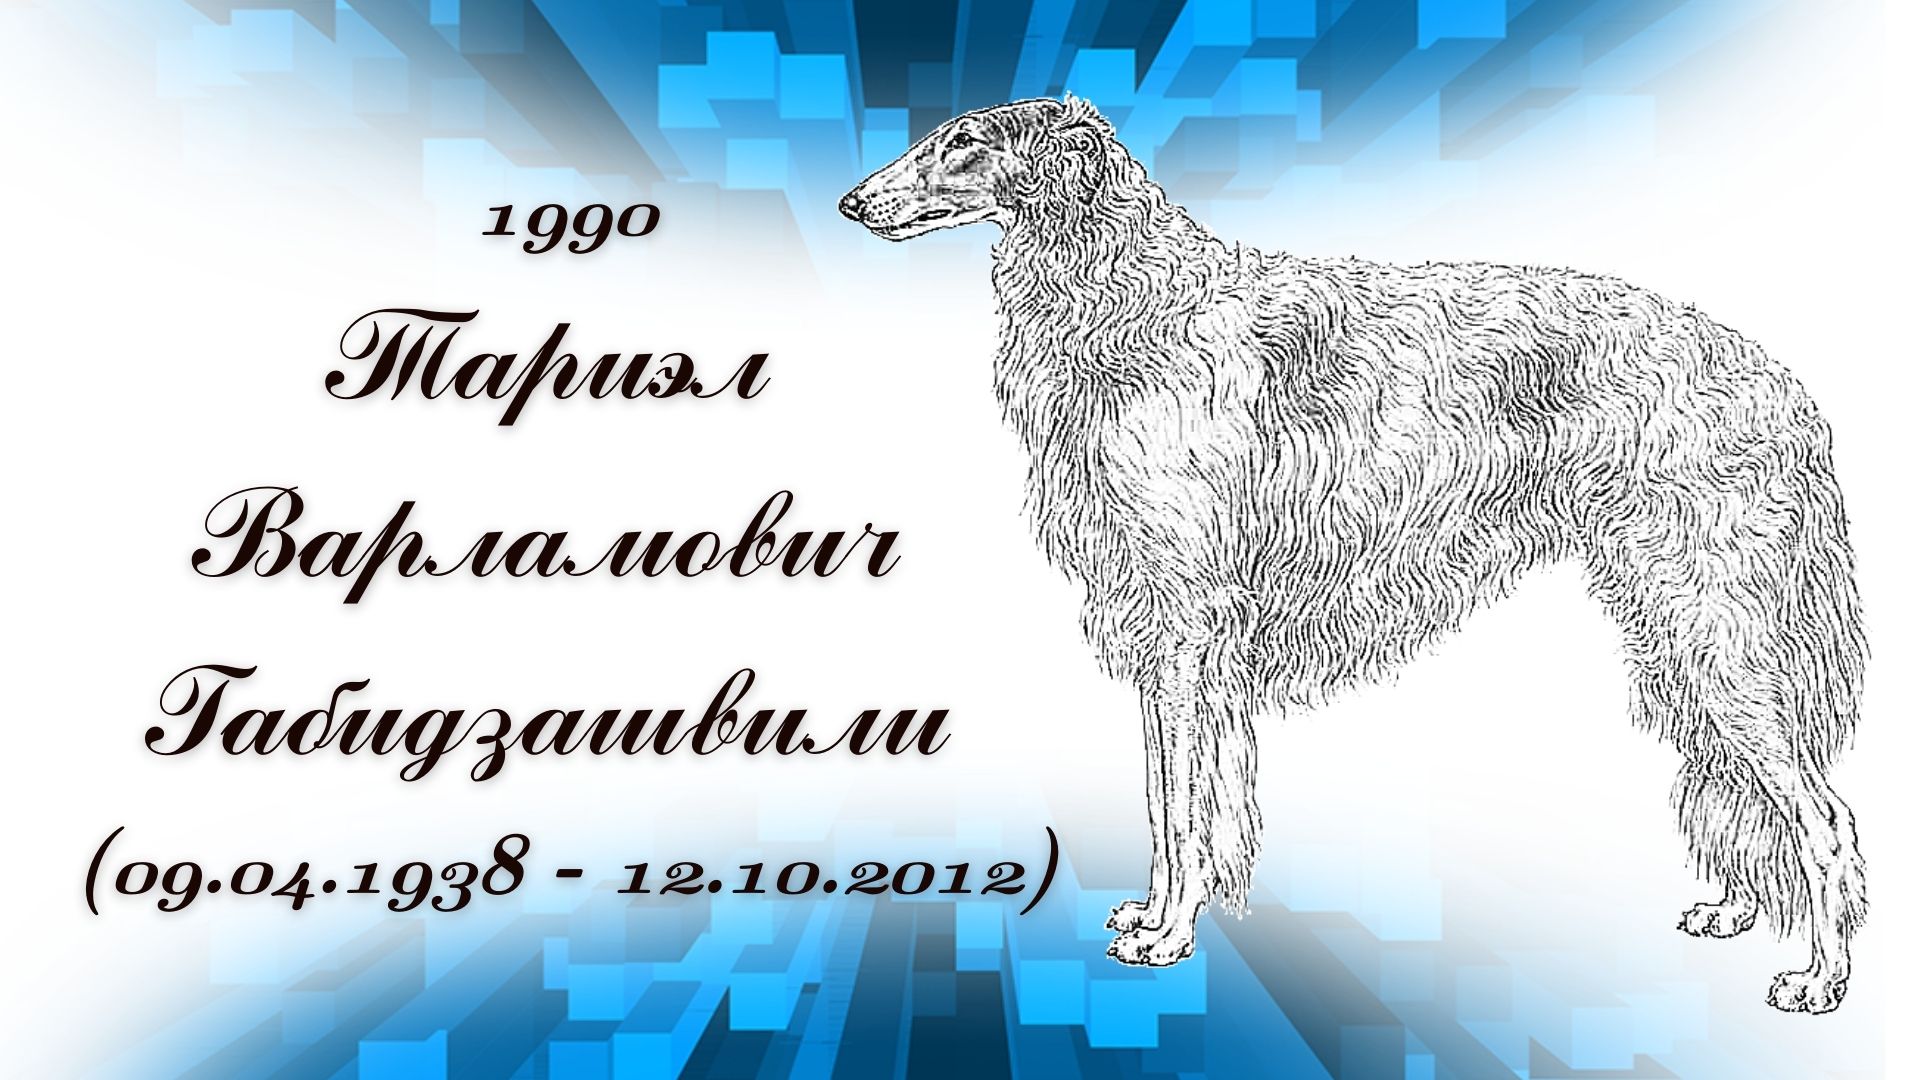 1990 ТАРИЭЛ ВАРЛАМОВИЧ ГАБИДЗАШВИЛИ (09.04.1938 - 12.10.2012)